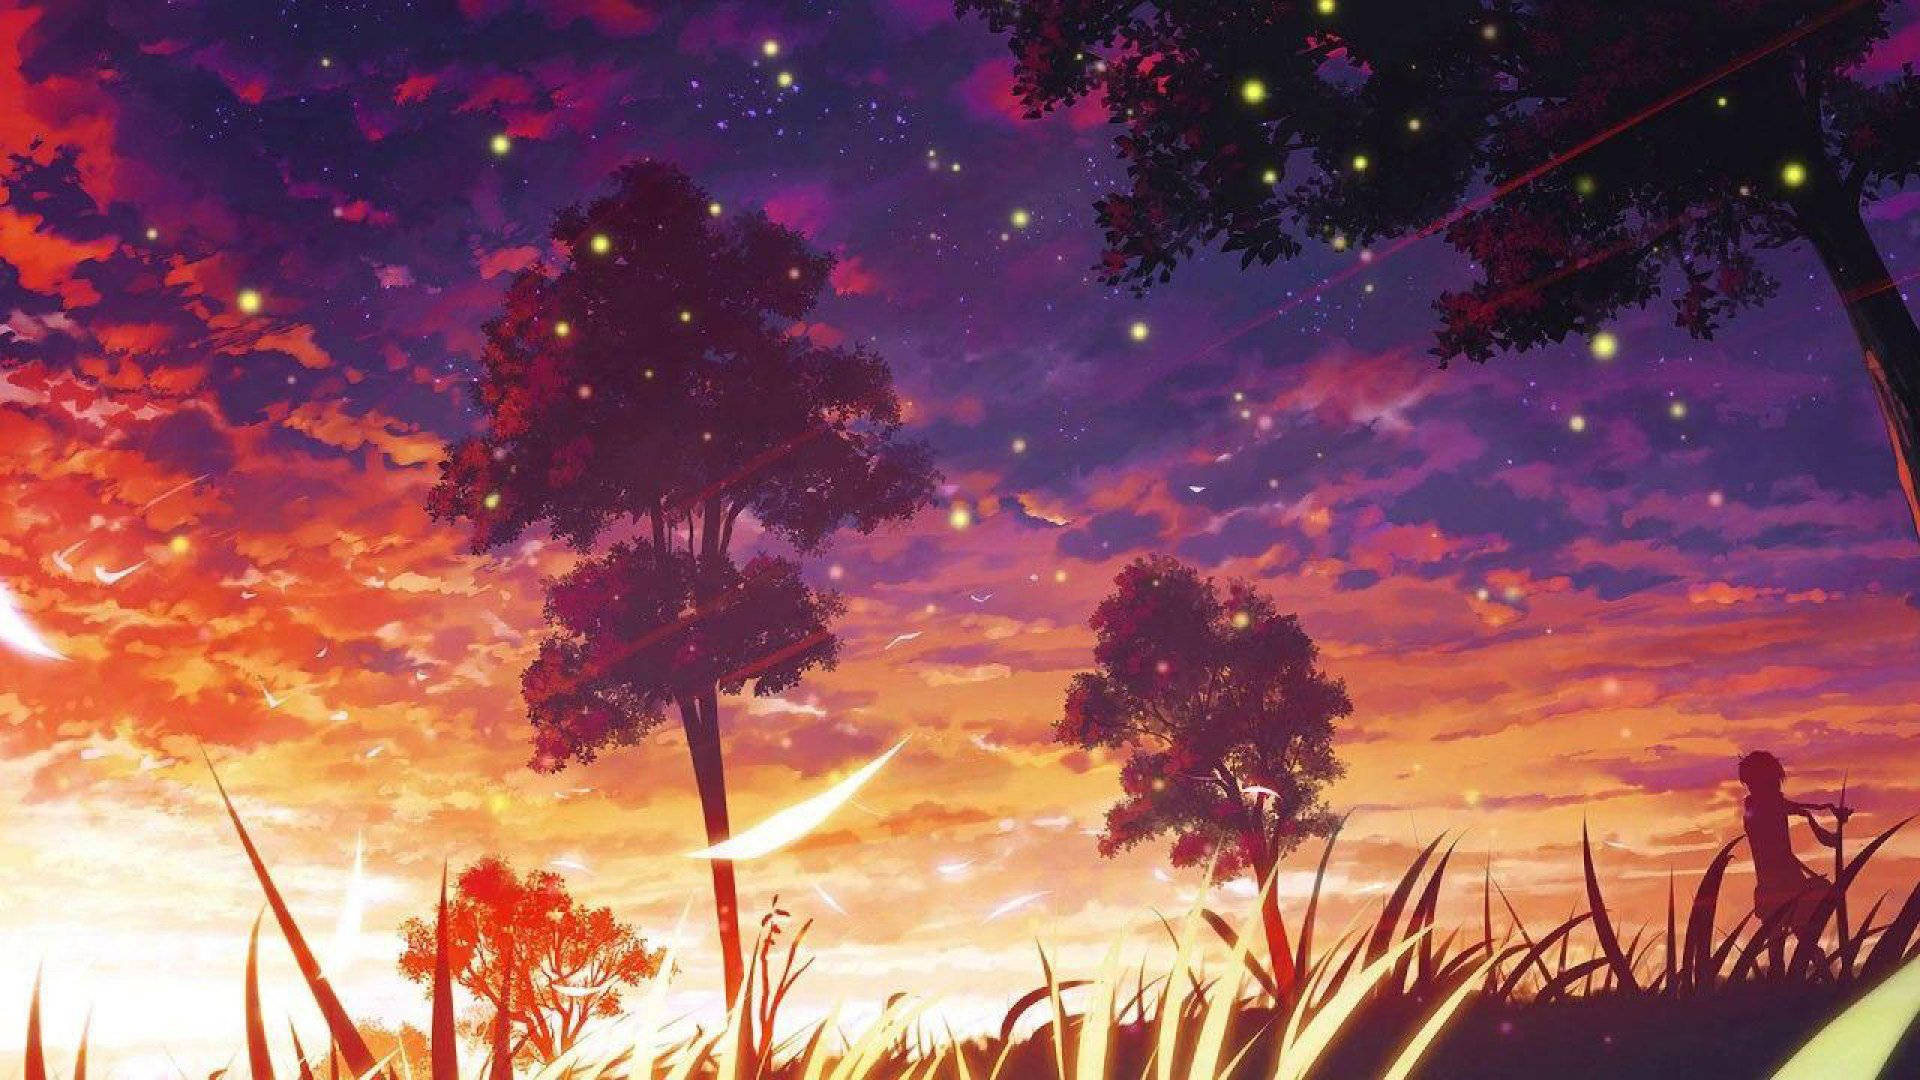 Aesthetic Art Fireflies Background